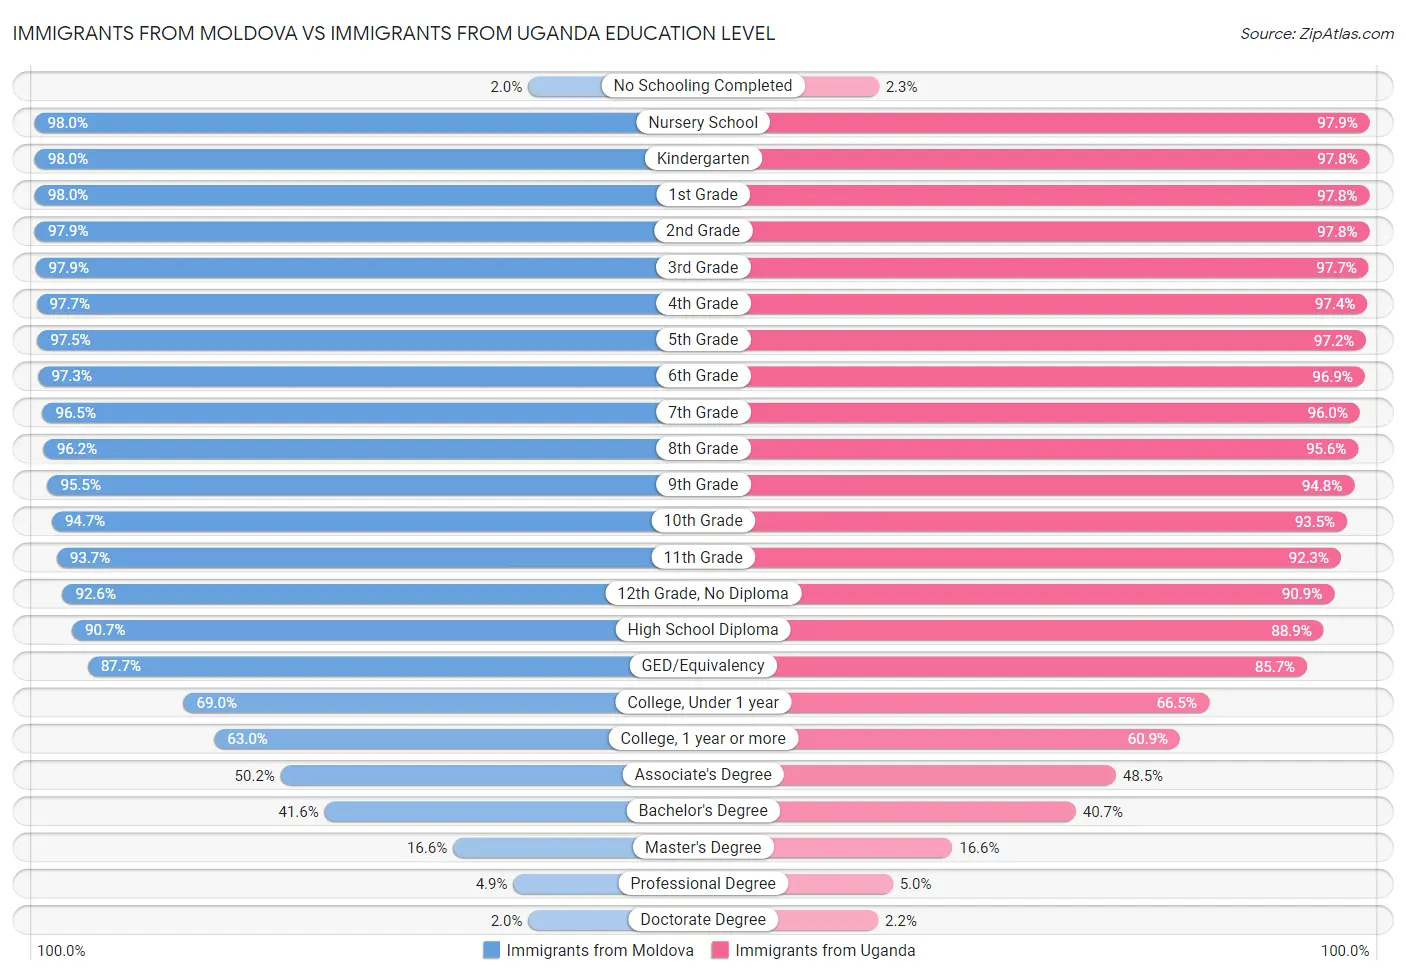 Immigrants from Moldova vs Immigrants from Uganda Education Level